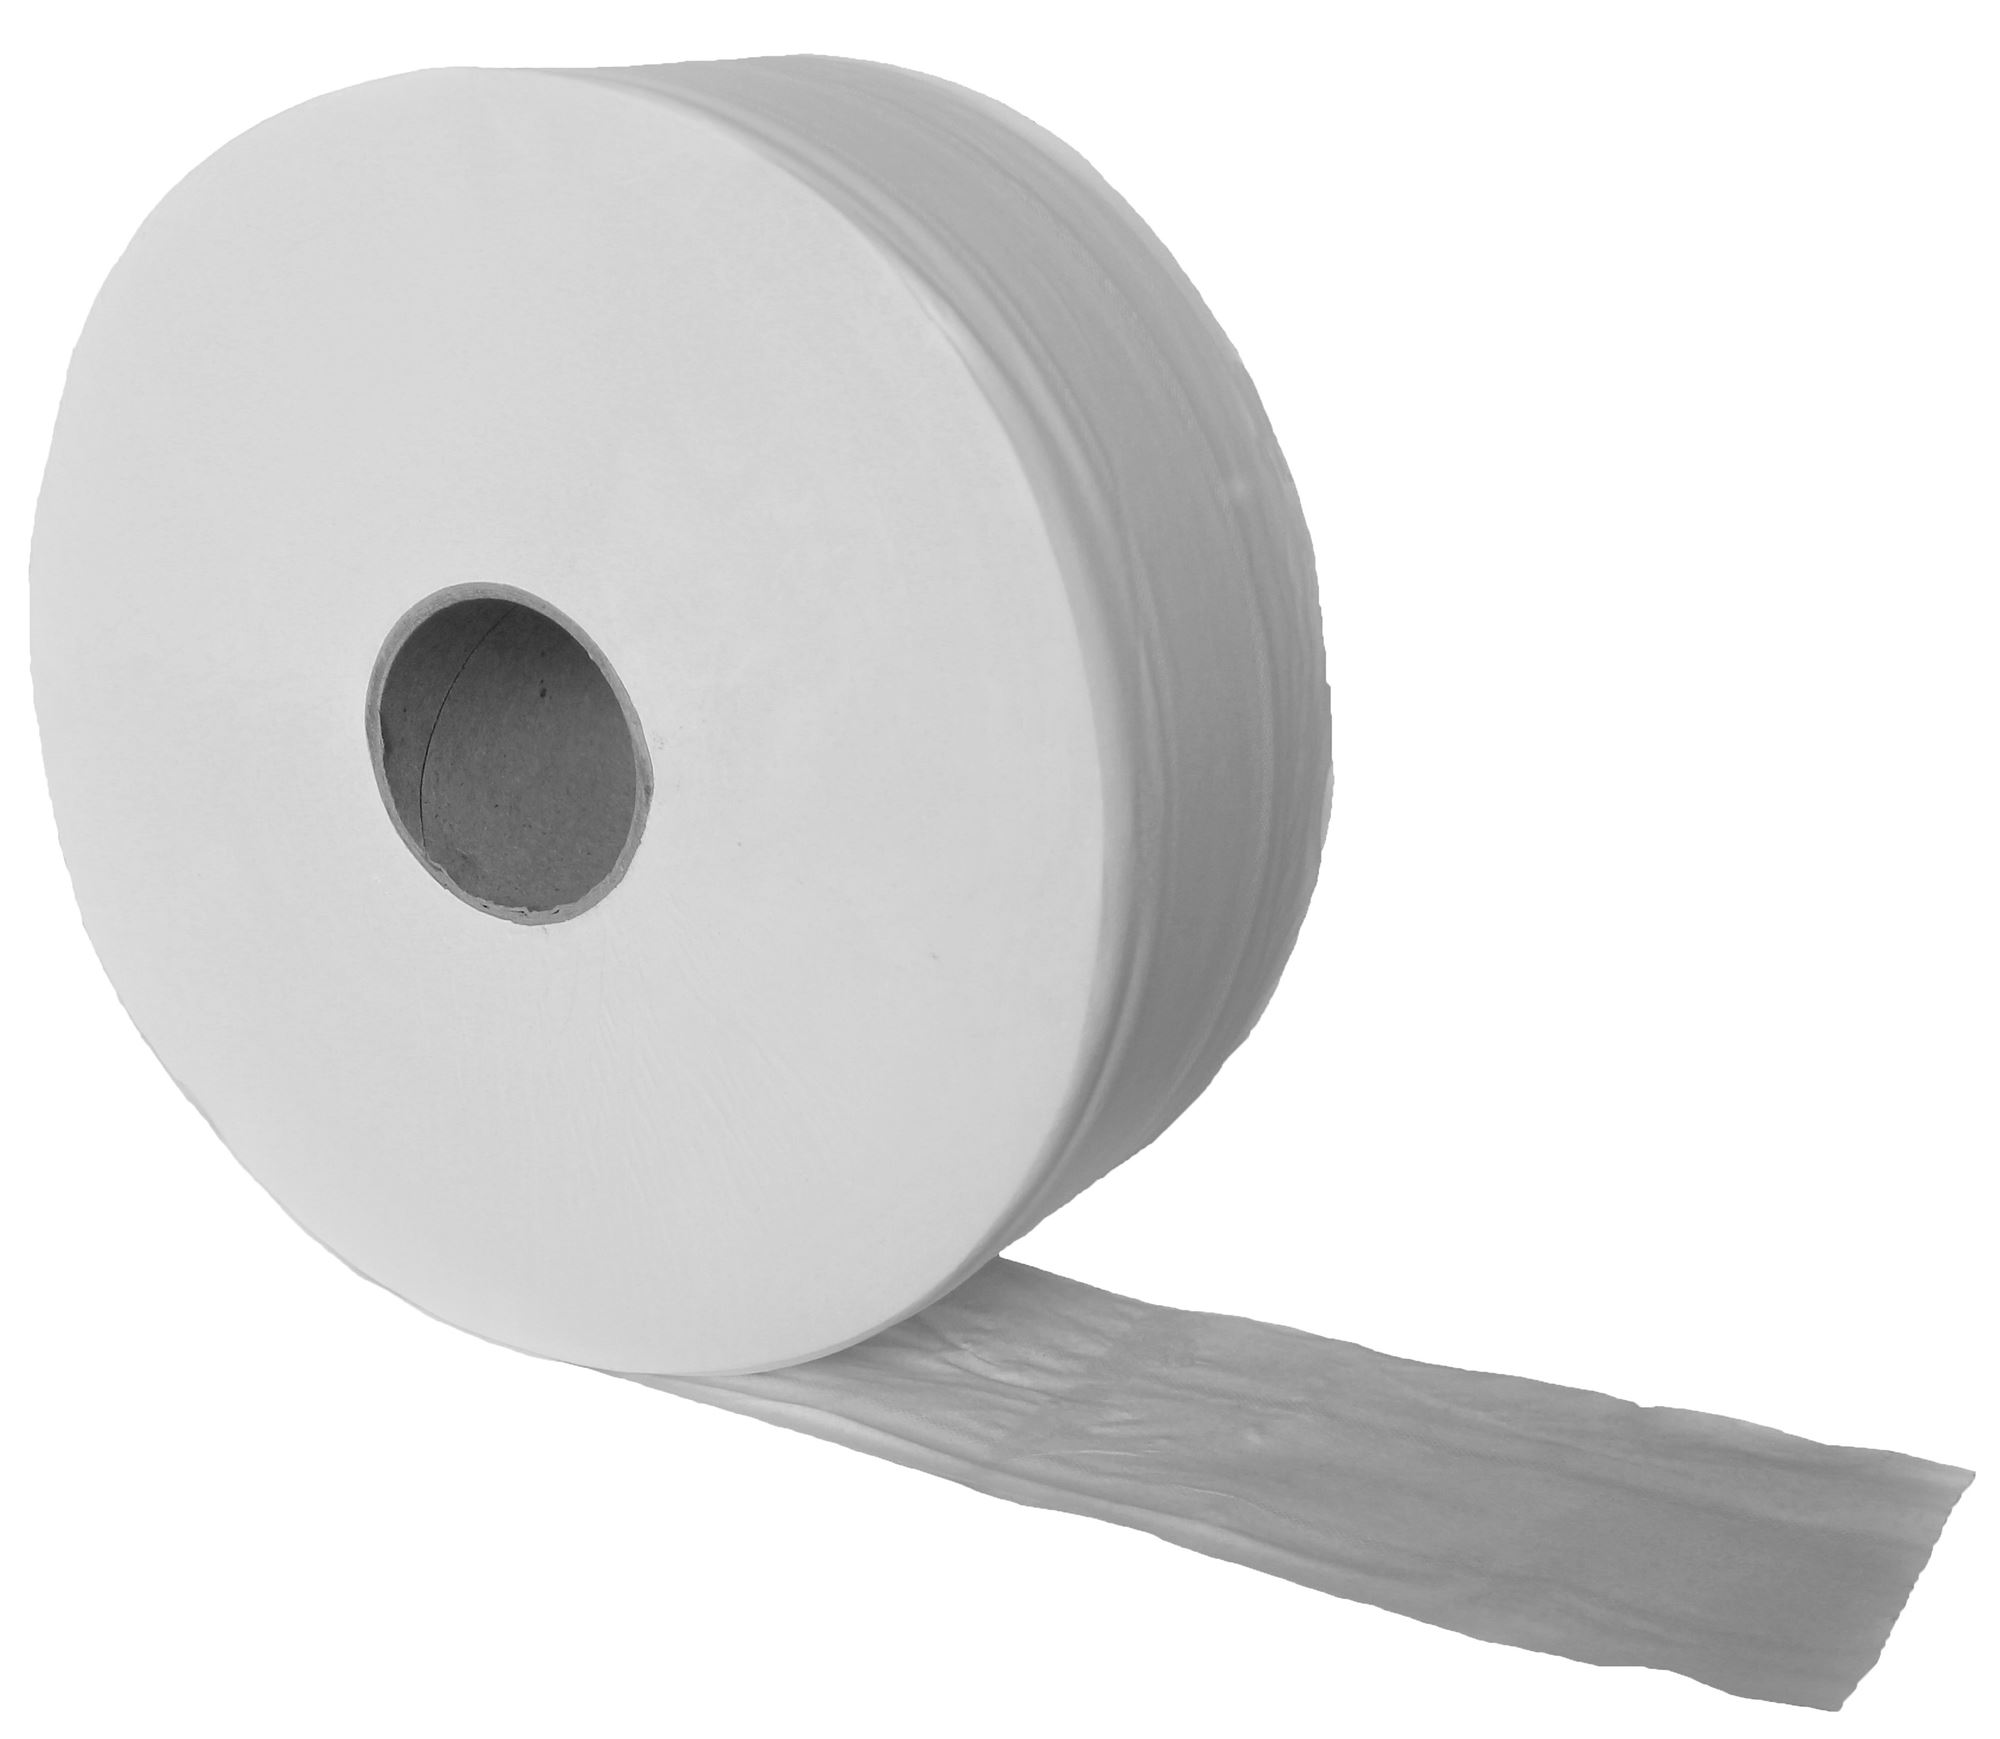 Papier toilette jumbo blanc 600 m 1 plis - Voussert